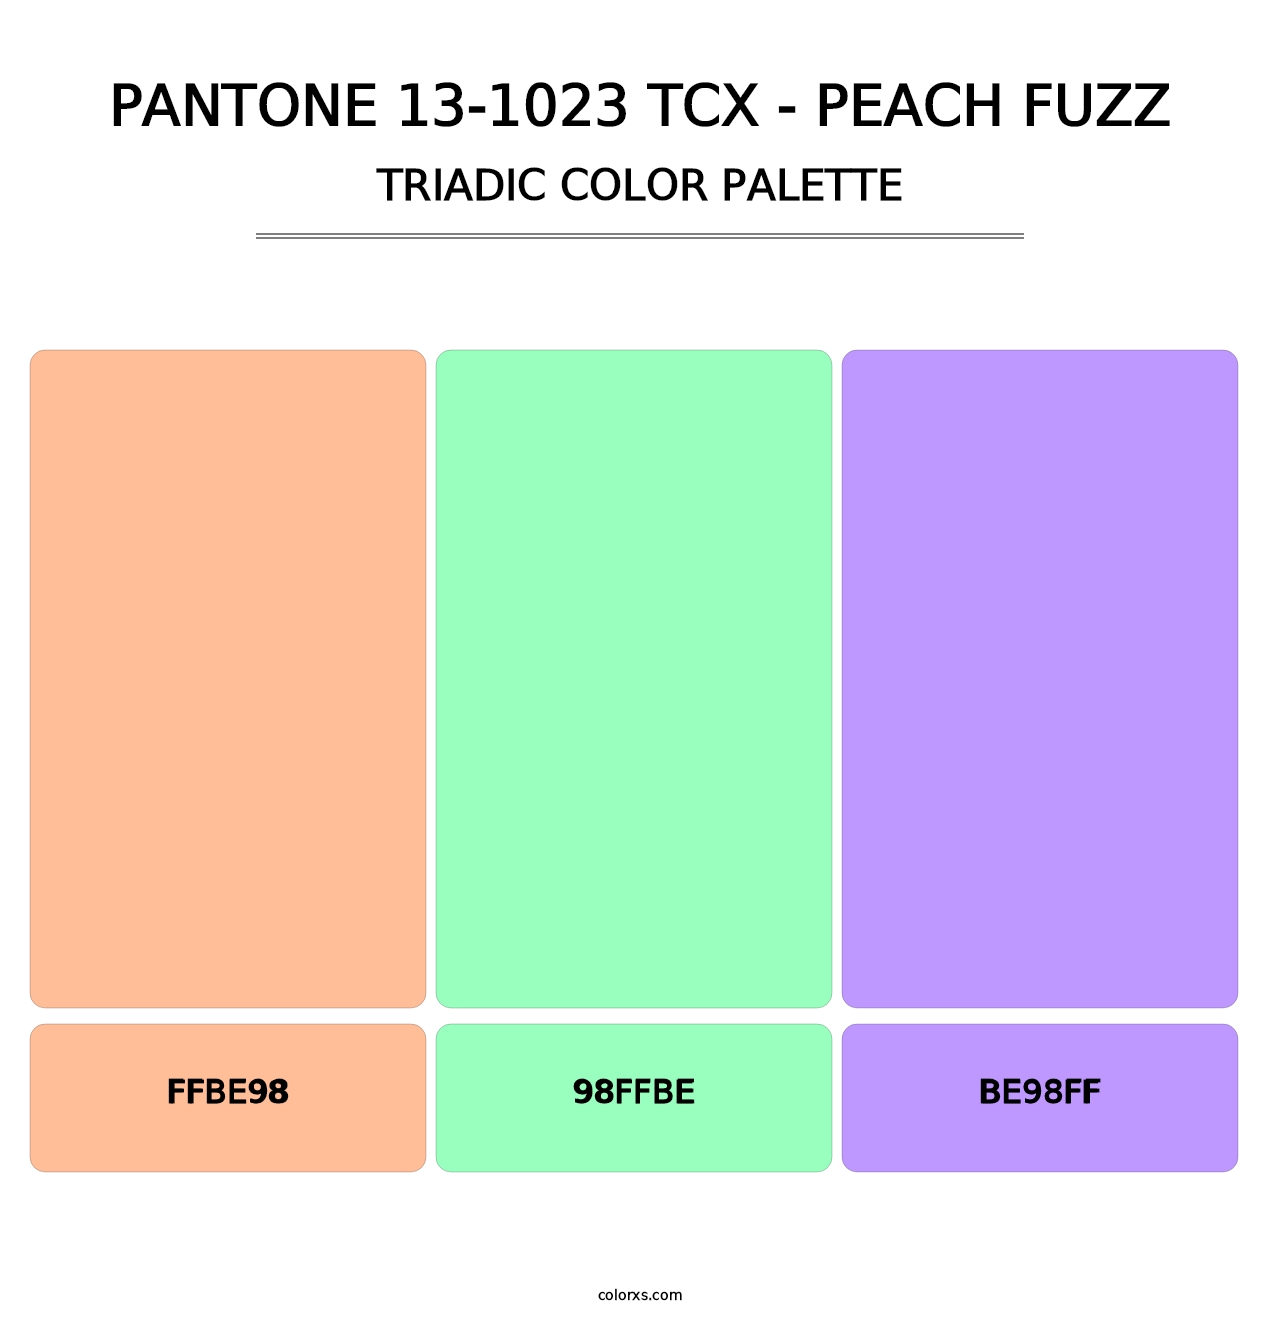 PANTONE 13-1023 TCX - Peach Fuzz - Triadic Color Palette